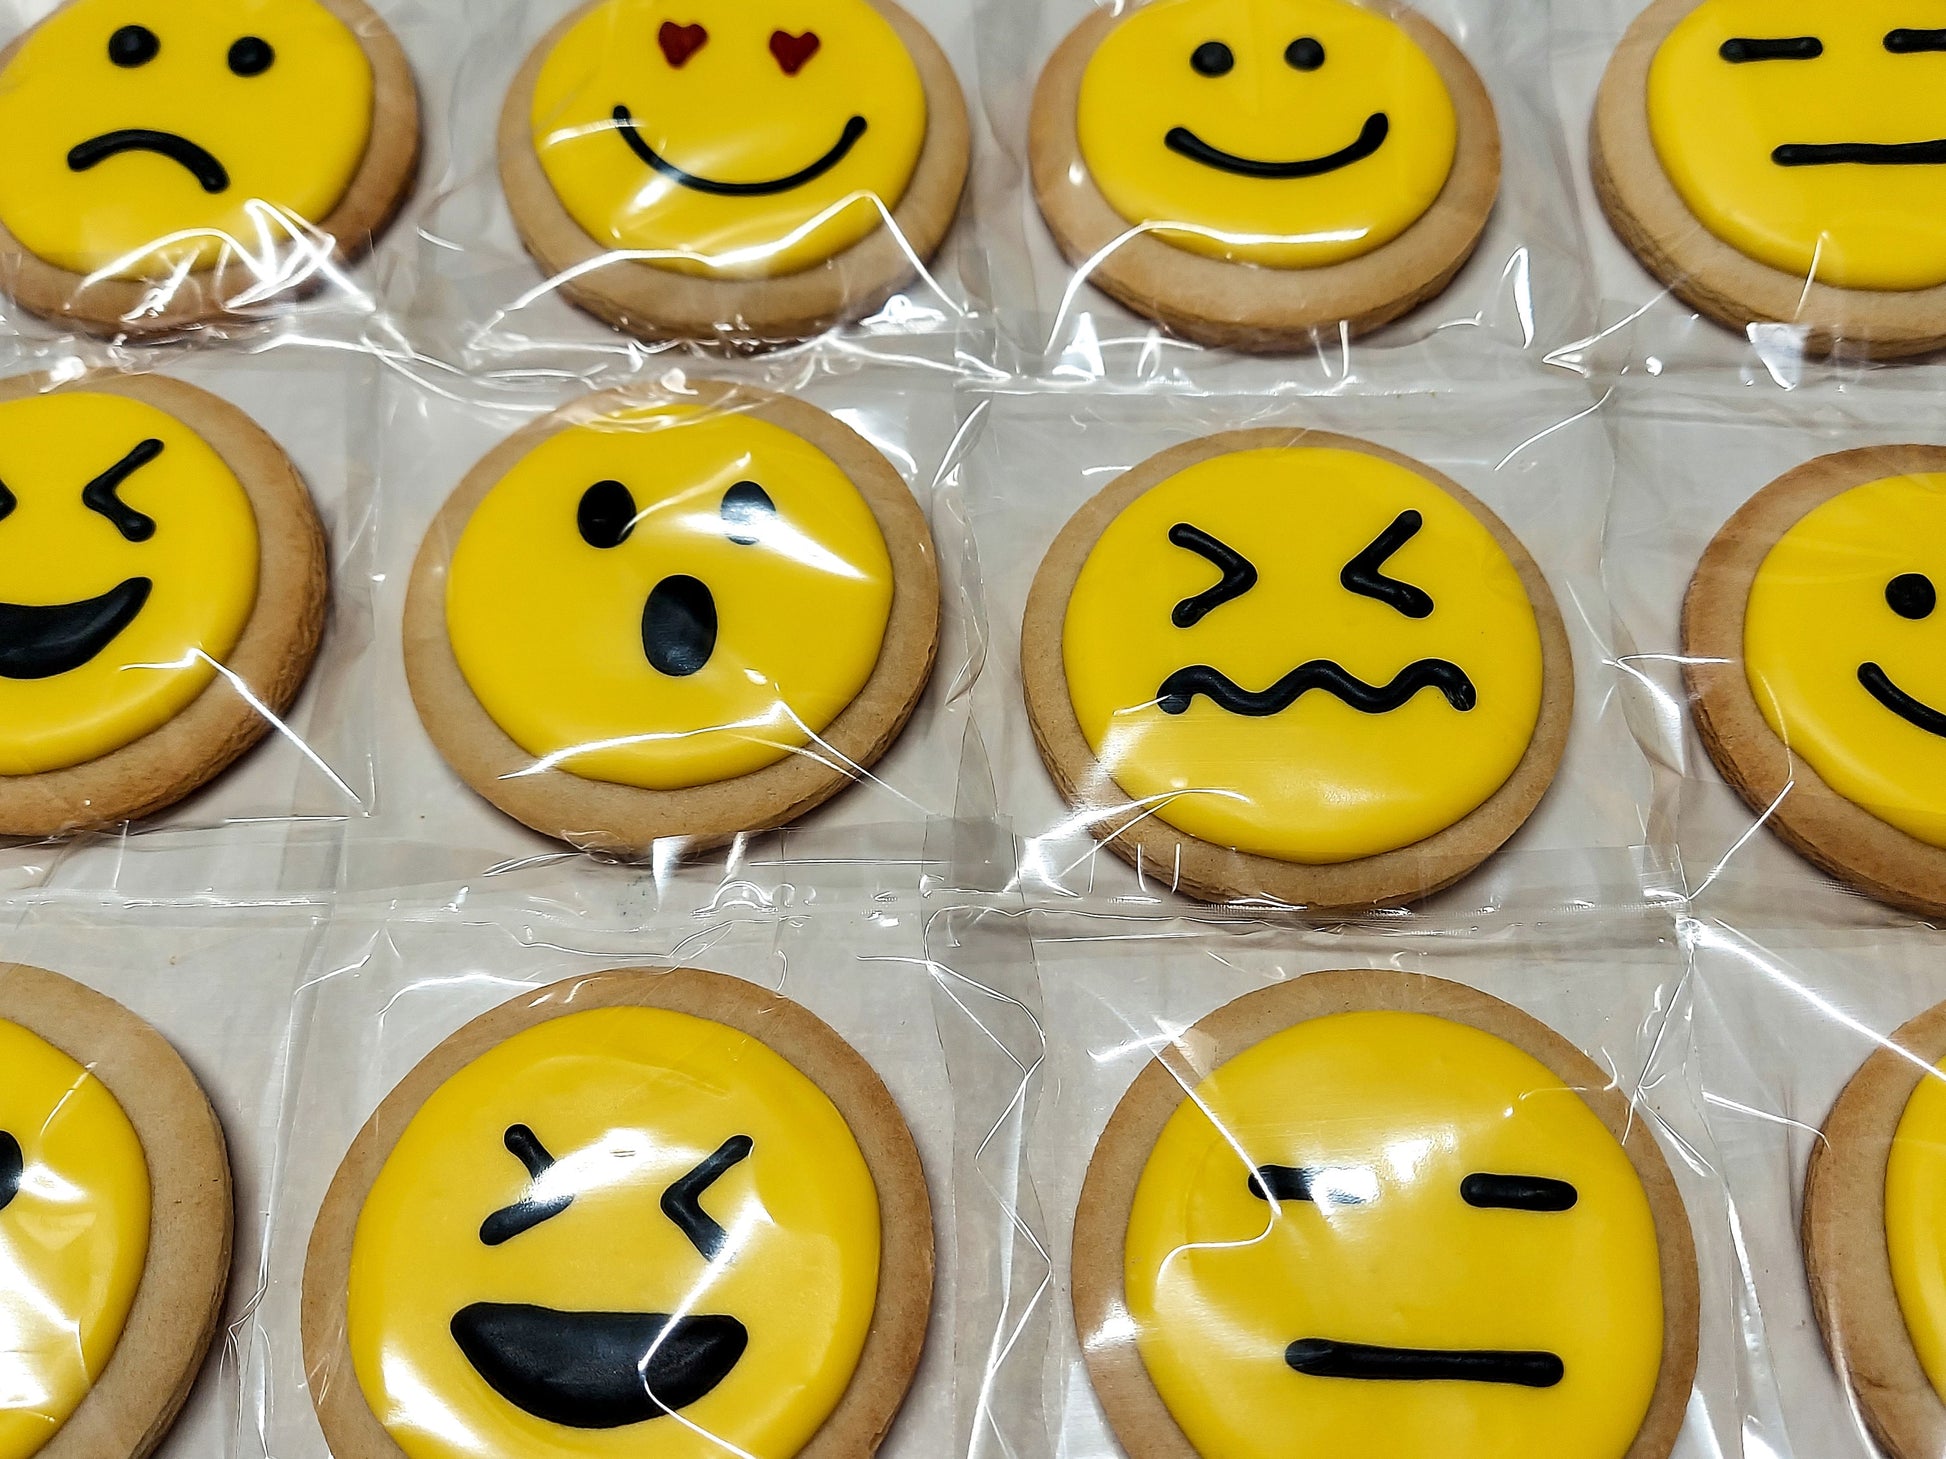 Emoji Face Cookies (1 dozen)